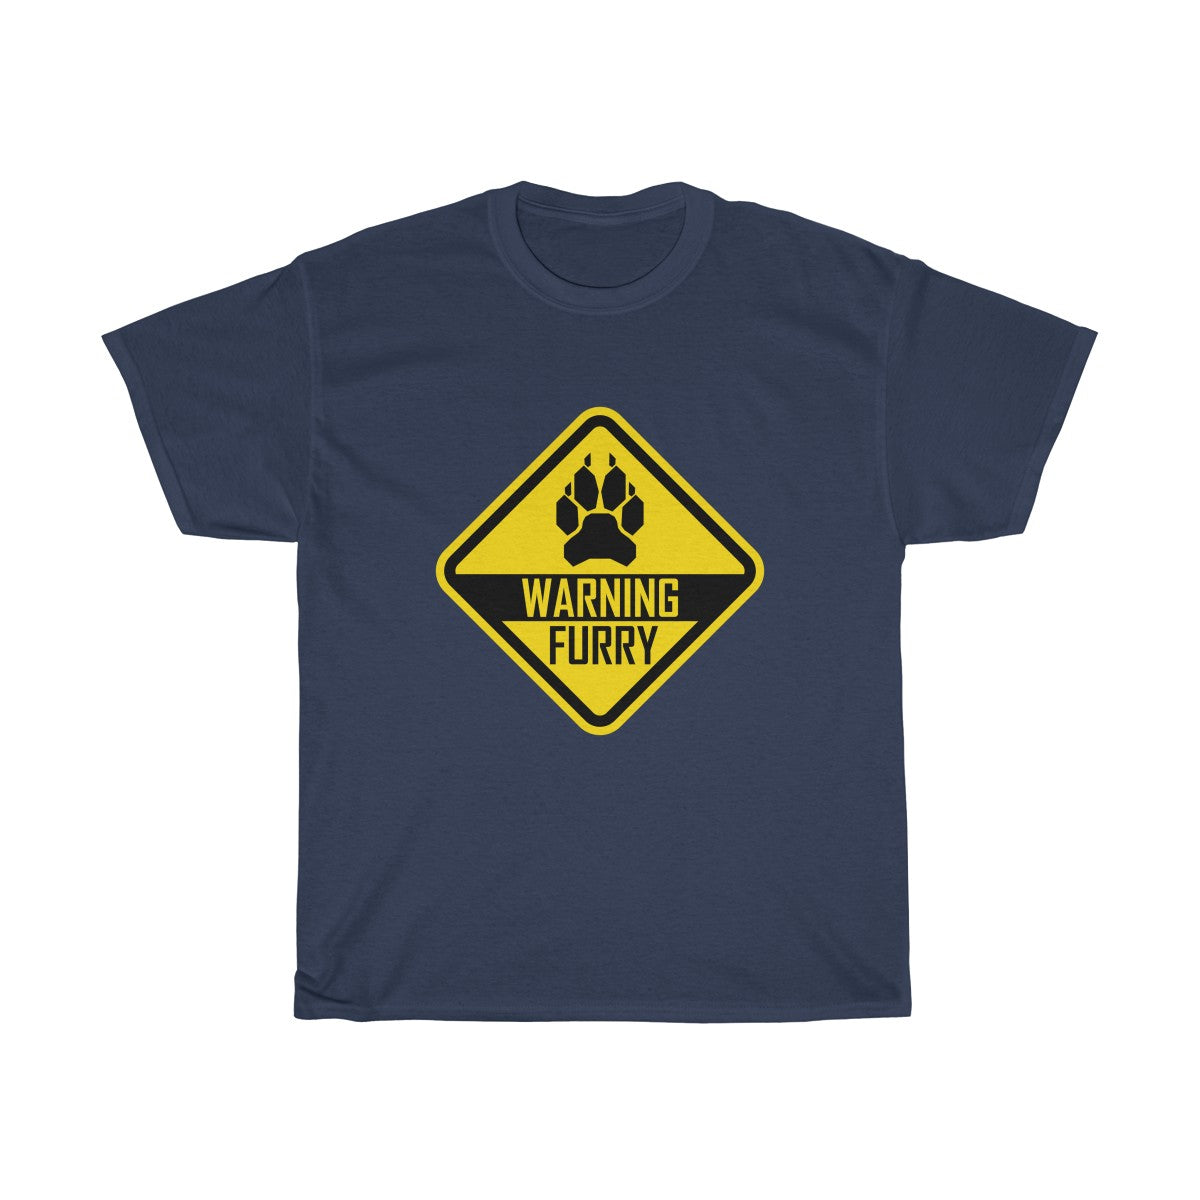 Warning Canine - T-Shirt T-Shirt Wexon Navy Blue S 